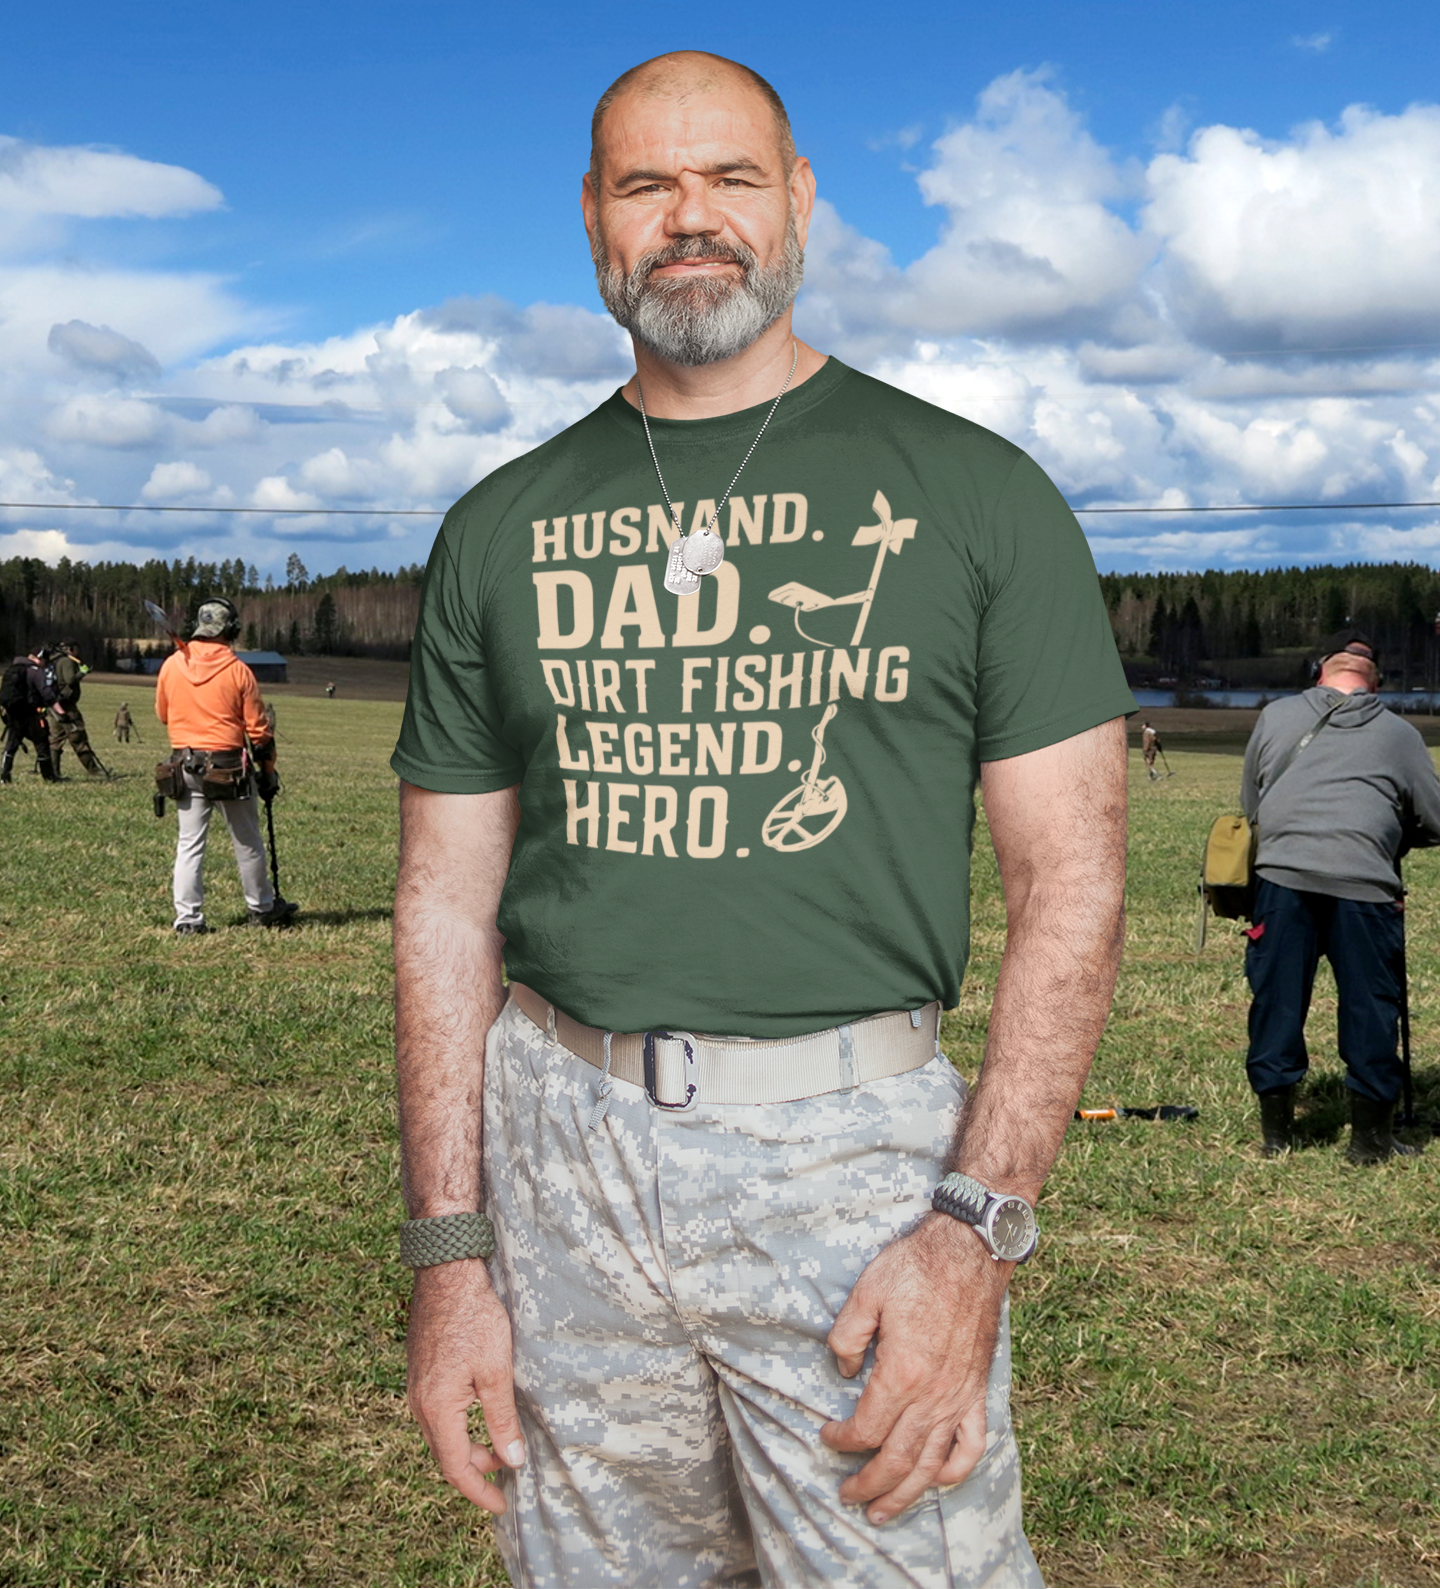 Husband.Dad. Dirt Fishing Legend. Hero - T-shirt